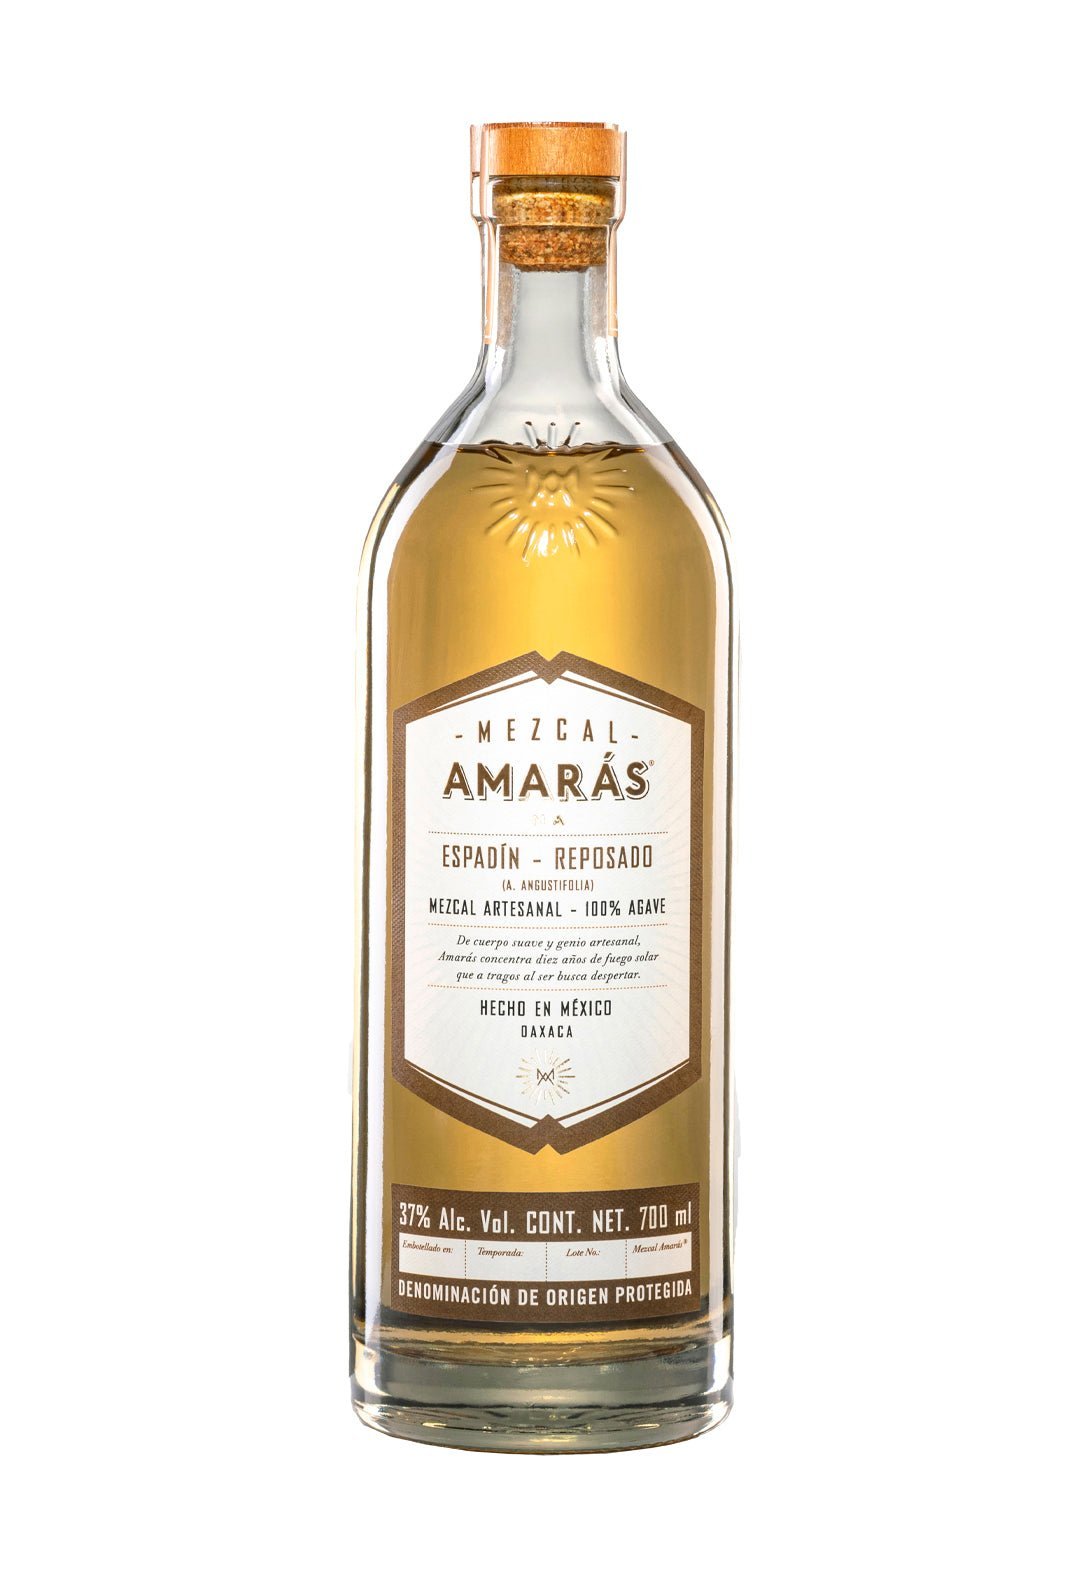 Mezcal Amares Reposado Espadin 40% 700ml | Tequila | Shop online at Spirits of France